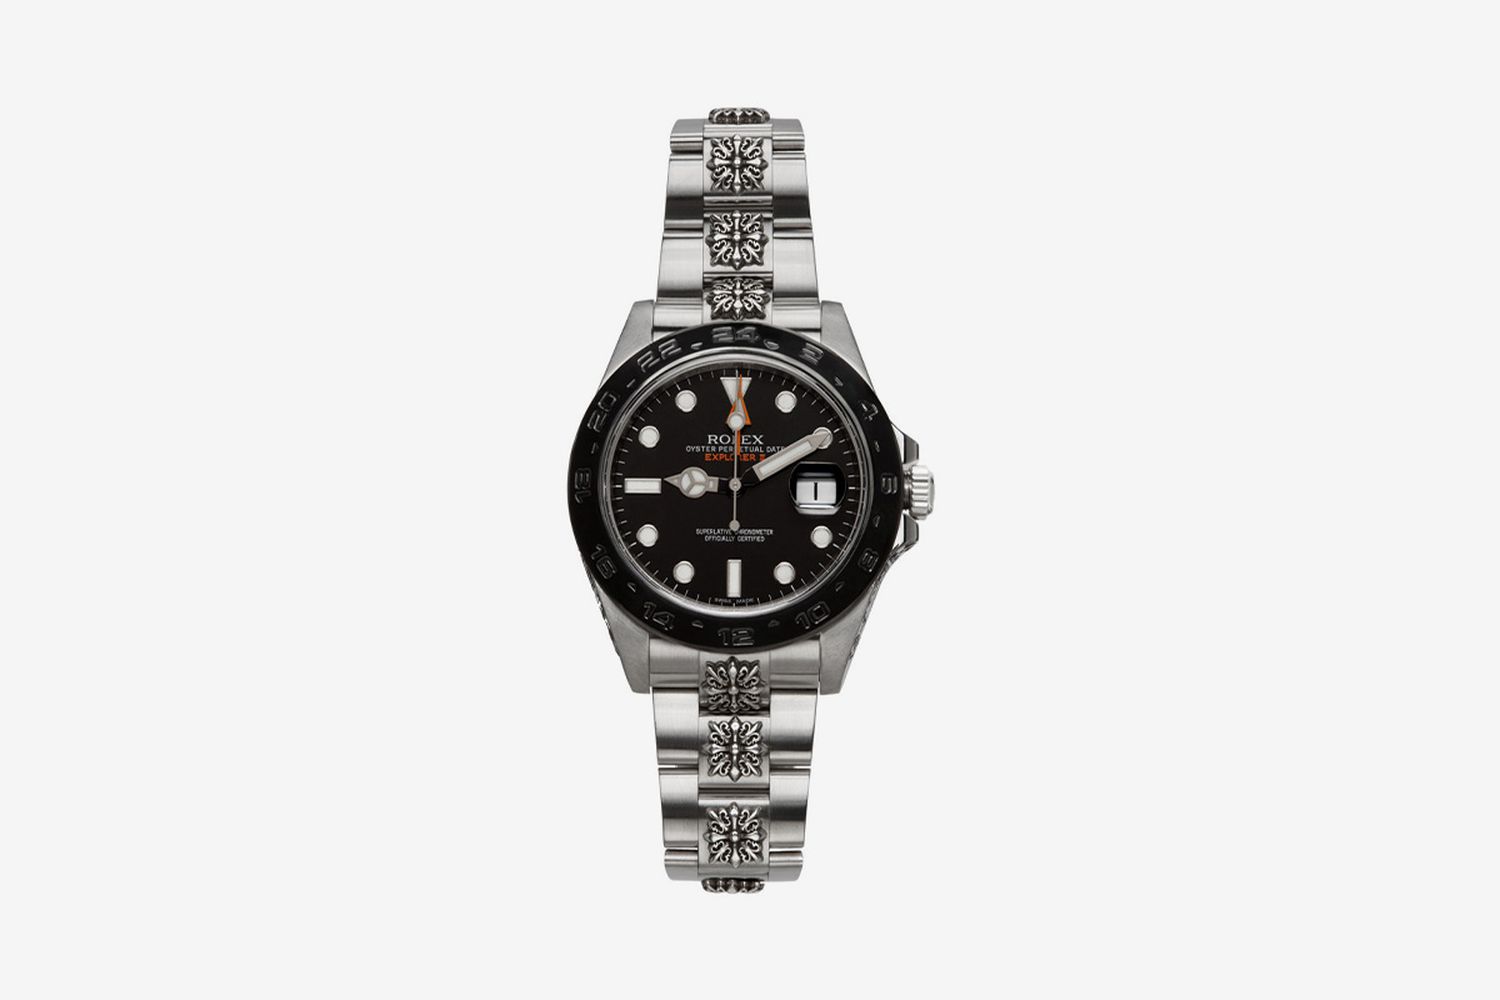 Customized Rolex Lys Explorer II Watch